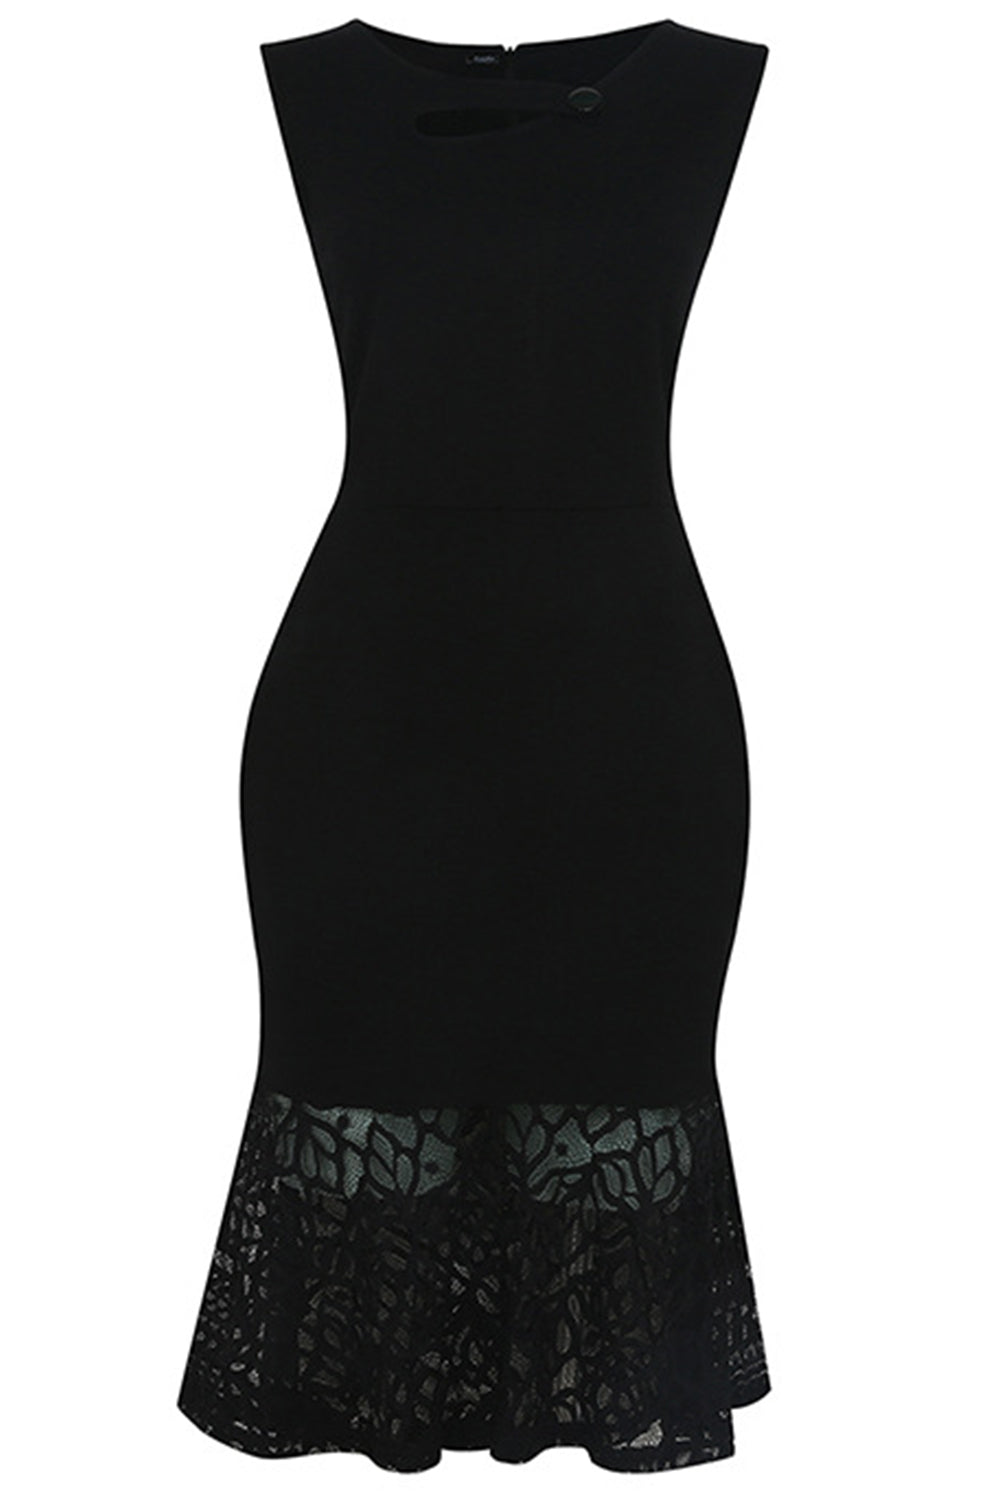 Ketty More Women Sleeveless Lace Decorated Mermaid Style Dress Black-KMWD007